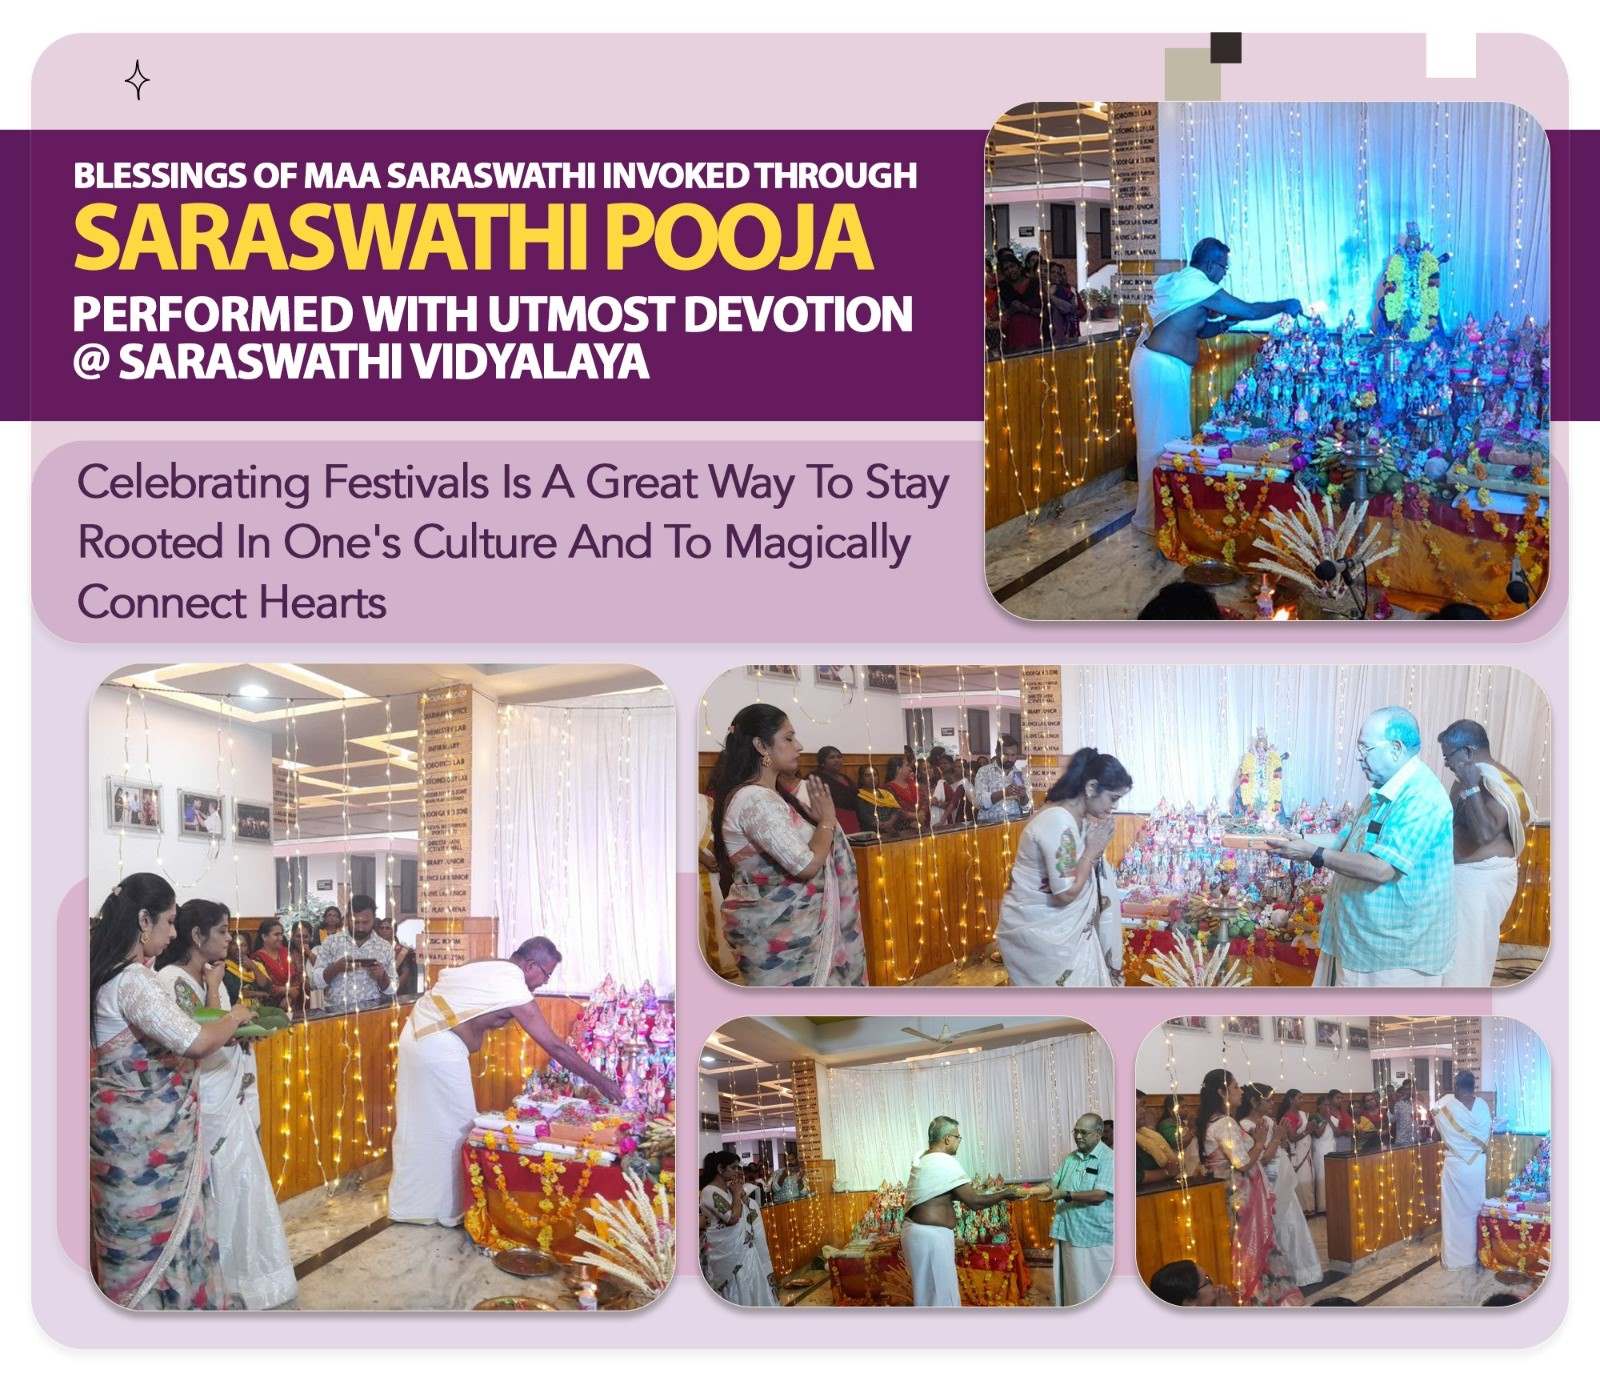 Blessings Of Maa Saraswathi Invoked Through Saraswathi Pooja Performed With Utmost Devotion @ Saraswathi Vidyalaya